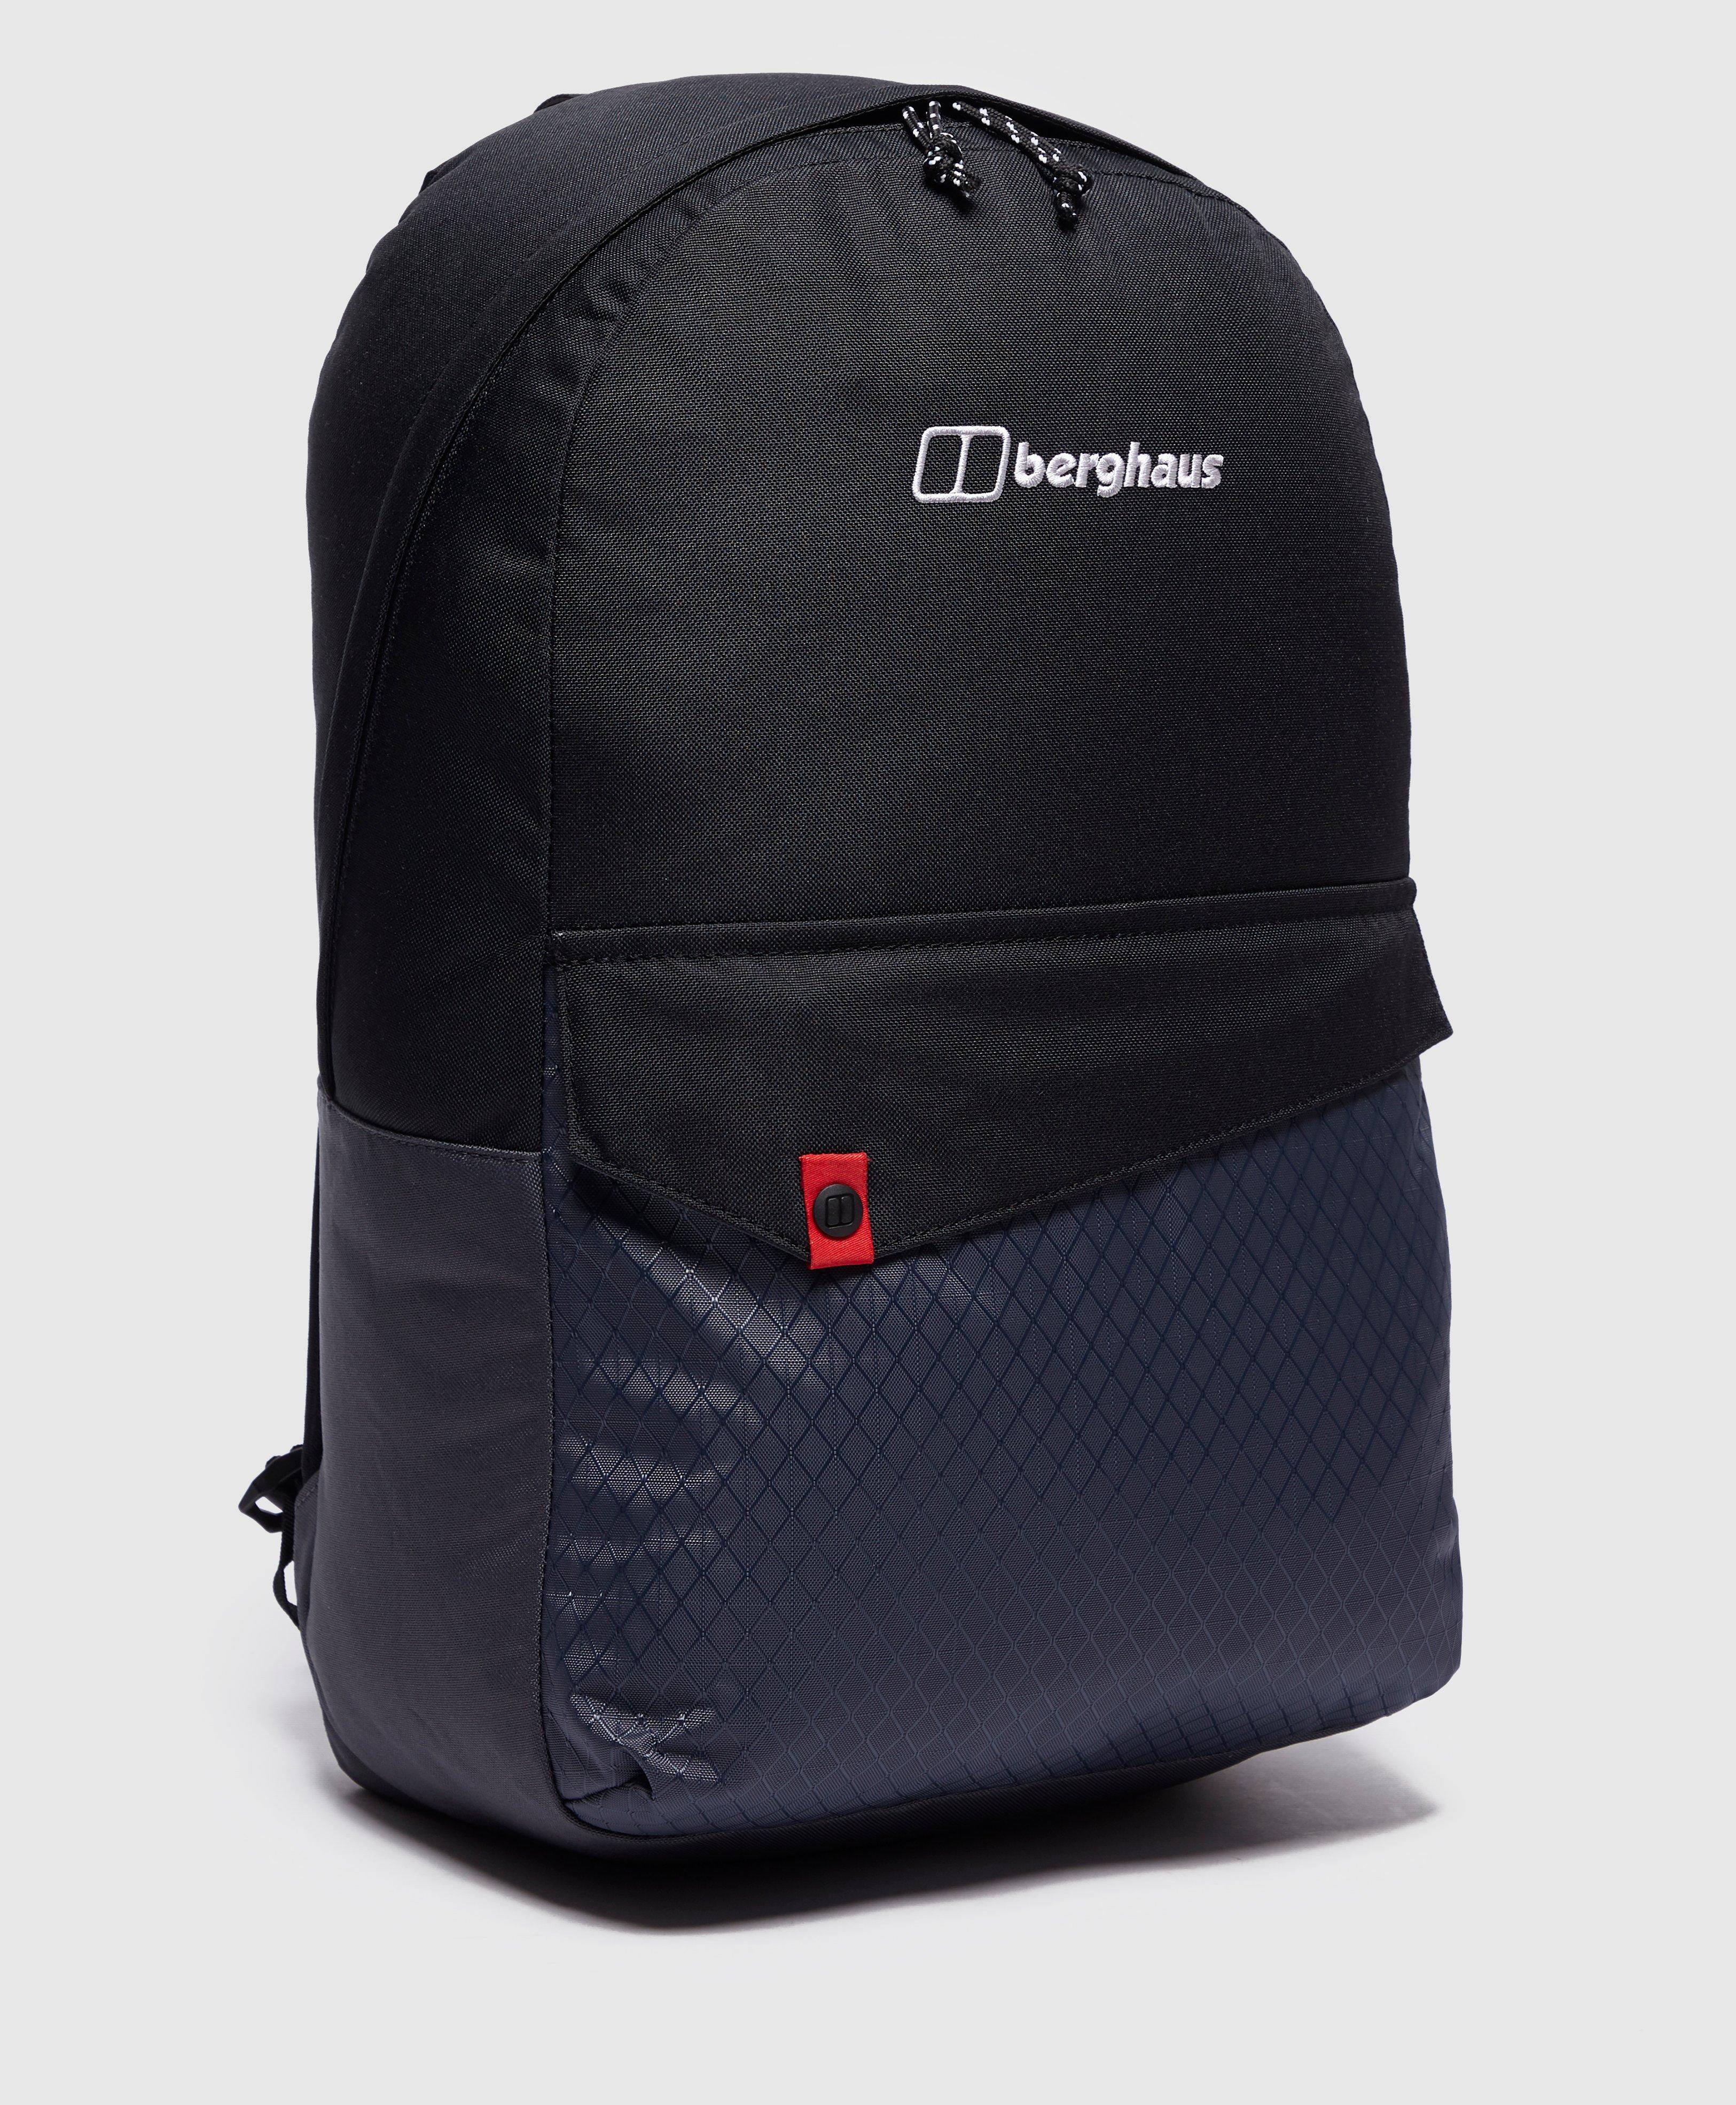 Berghaus Synthetic Brand 25 Backpack in Black for Men - Lyst